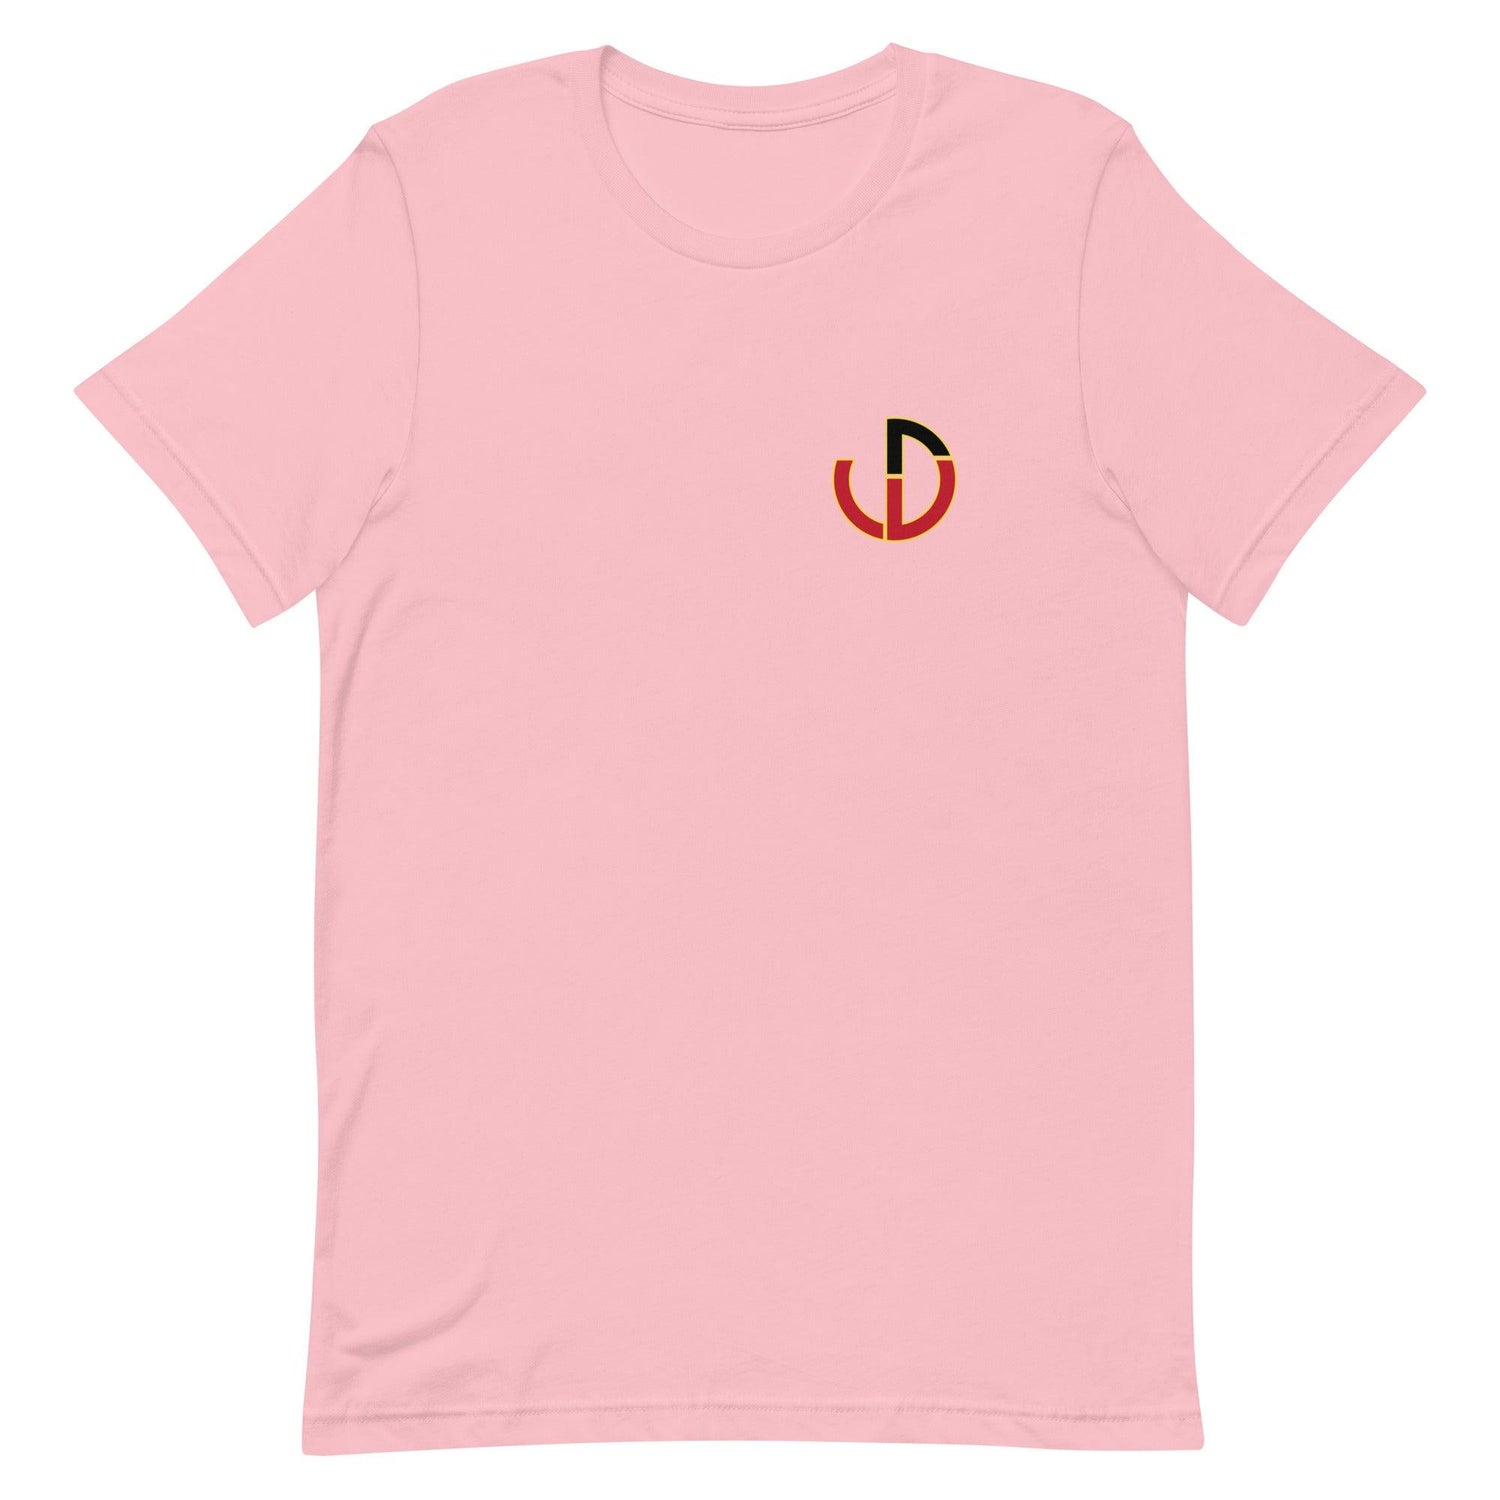 DeAnna Wilson "Essential" t-shirt - Fan Arch